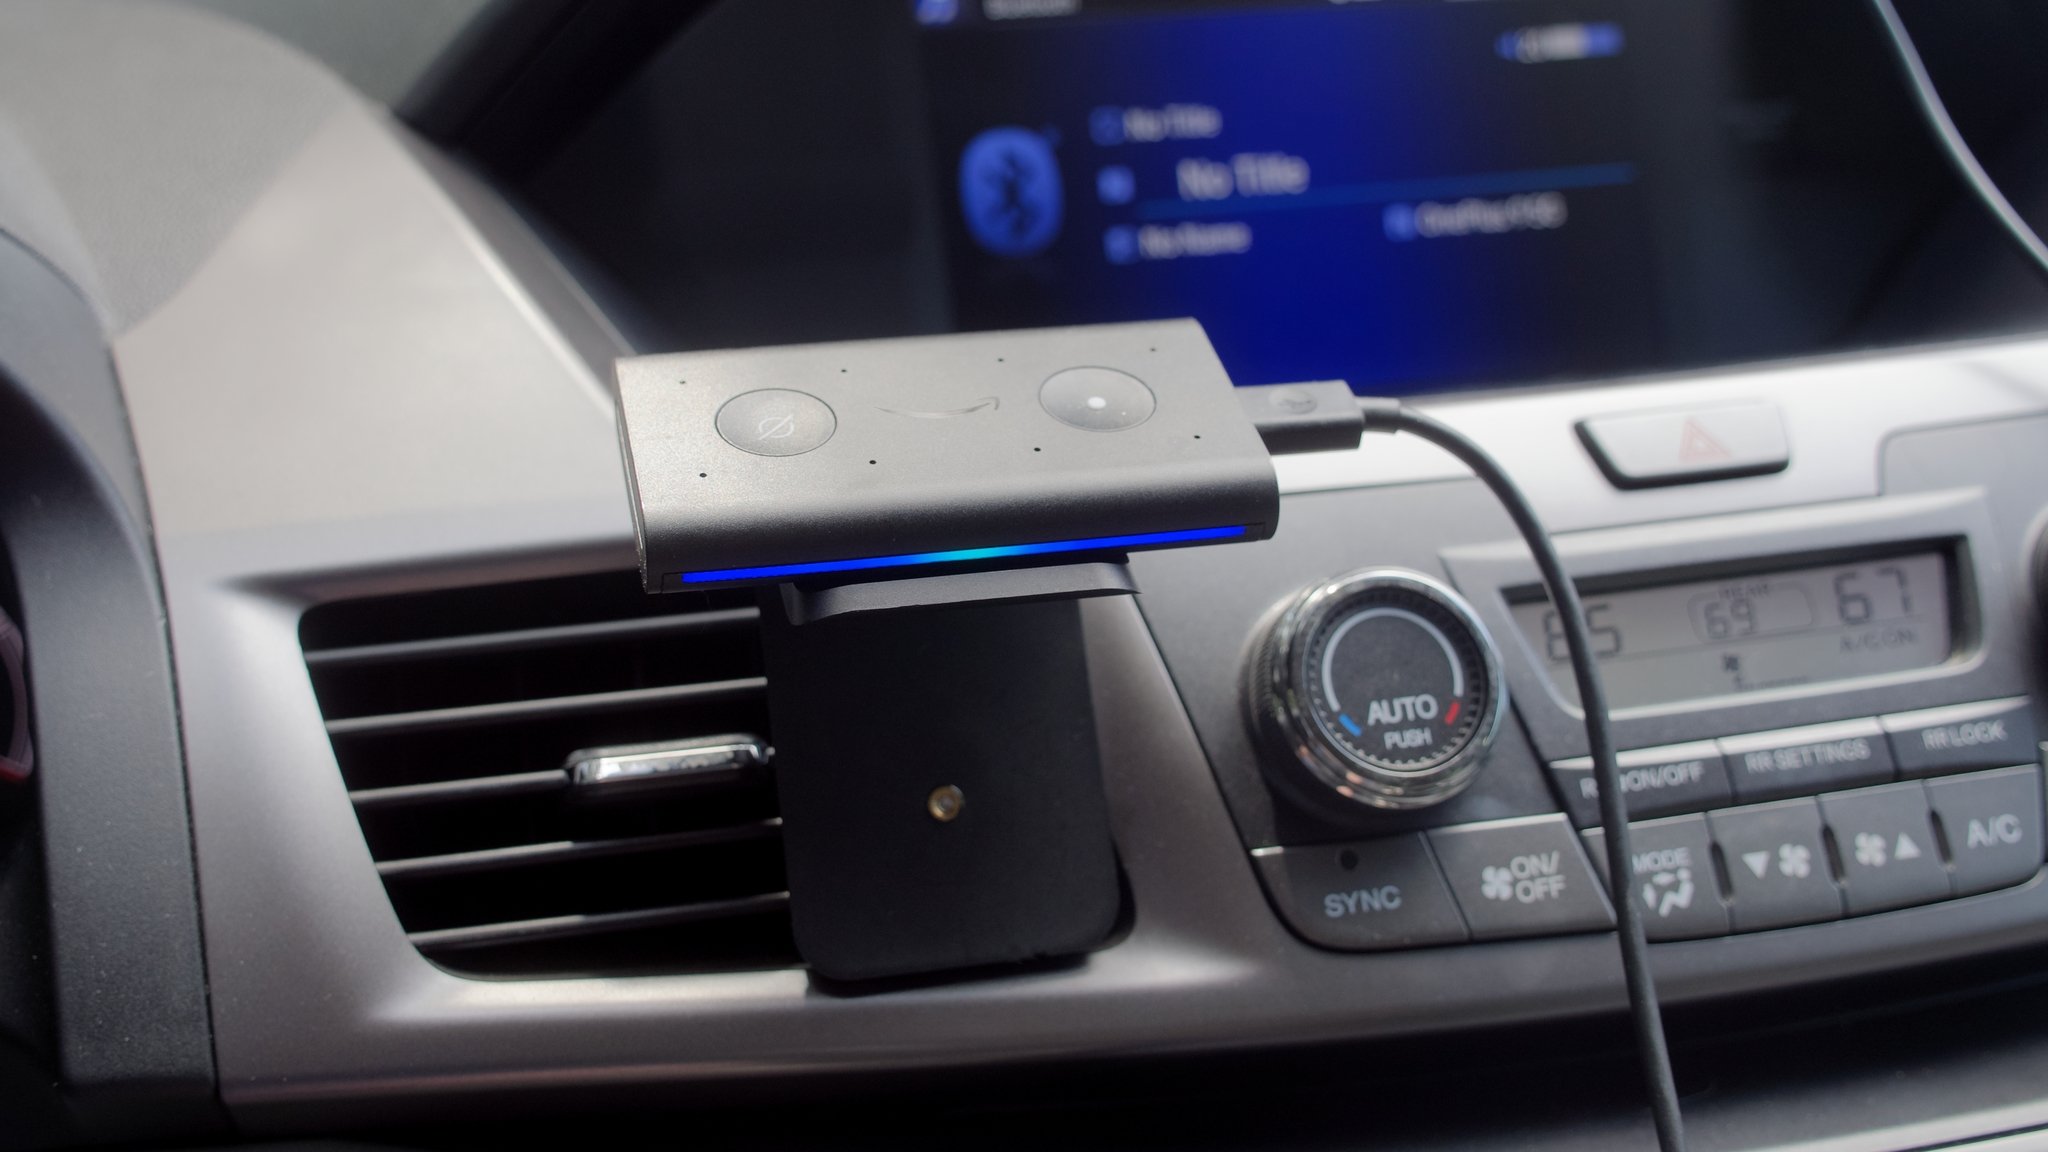 Echo Auto Alexa Smart Assistant for Vehicle Car